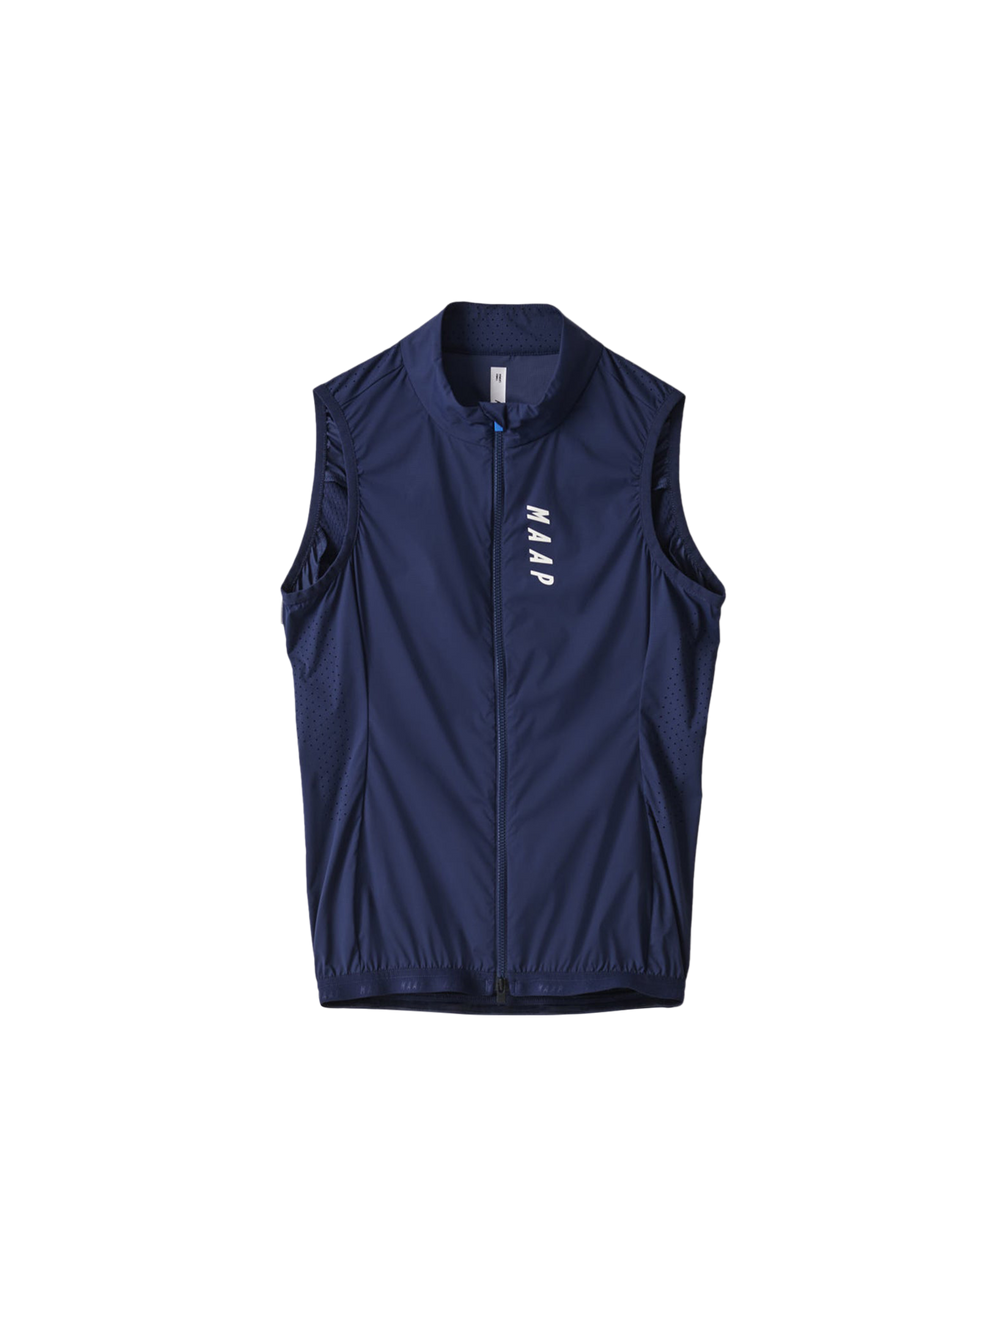 Product Image for Women's Draft Team Vest